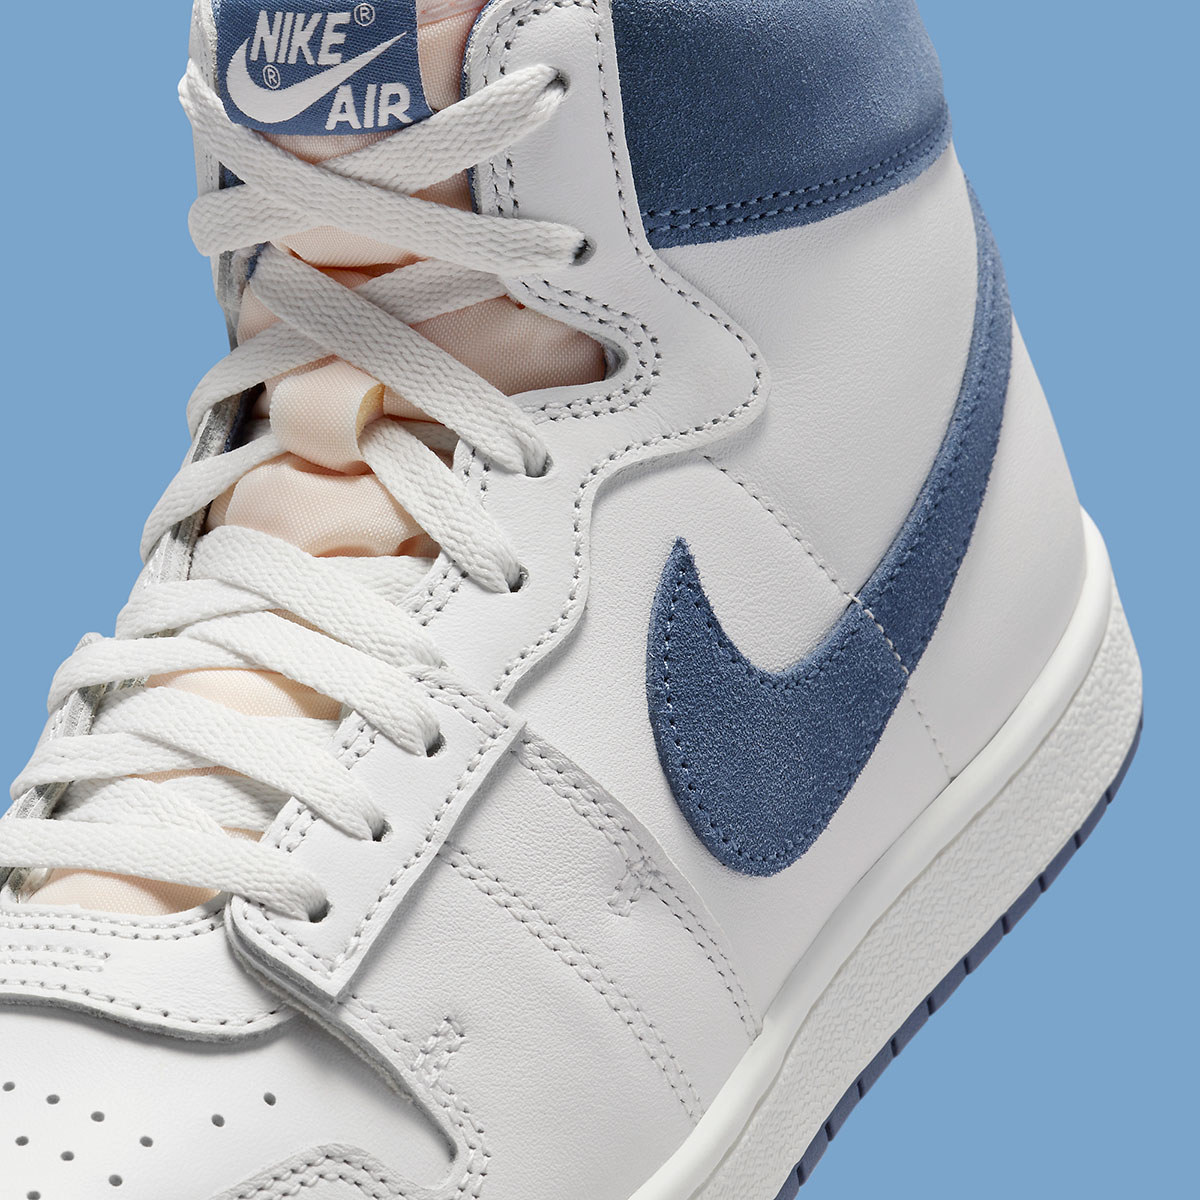 Sygnowane logo marki Nike Jordan White Diffused Blue Dz3497 140 Release Date 2